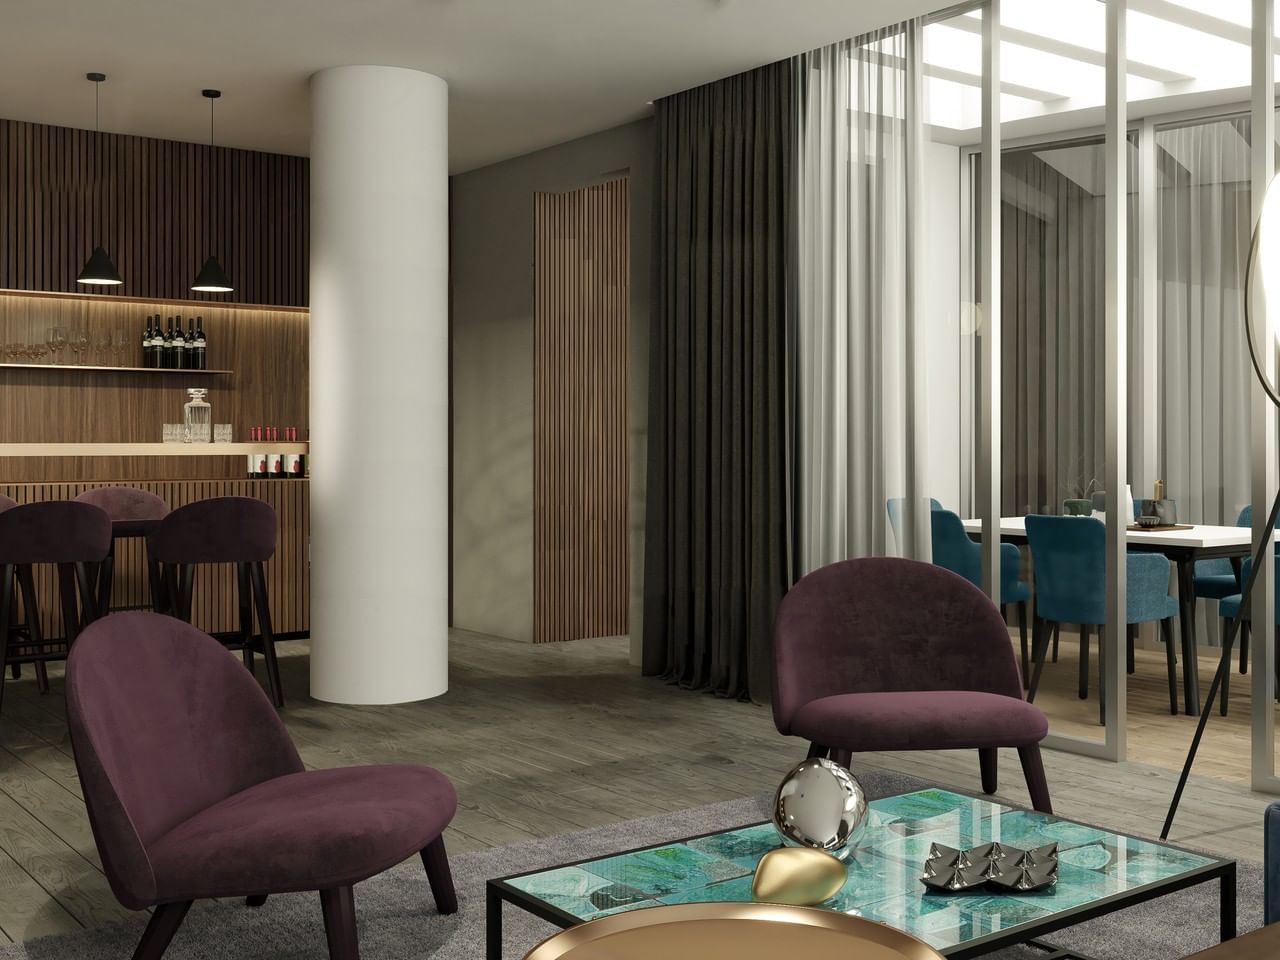 Concept design of La Condesa Suite interior at Wyndham Grand